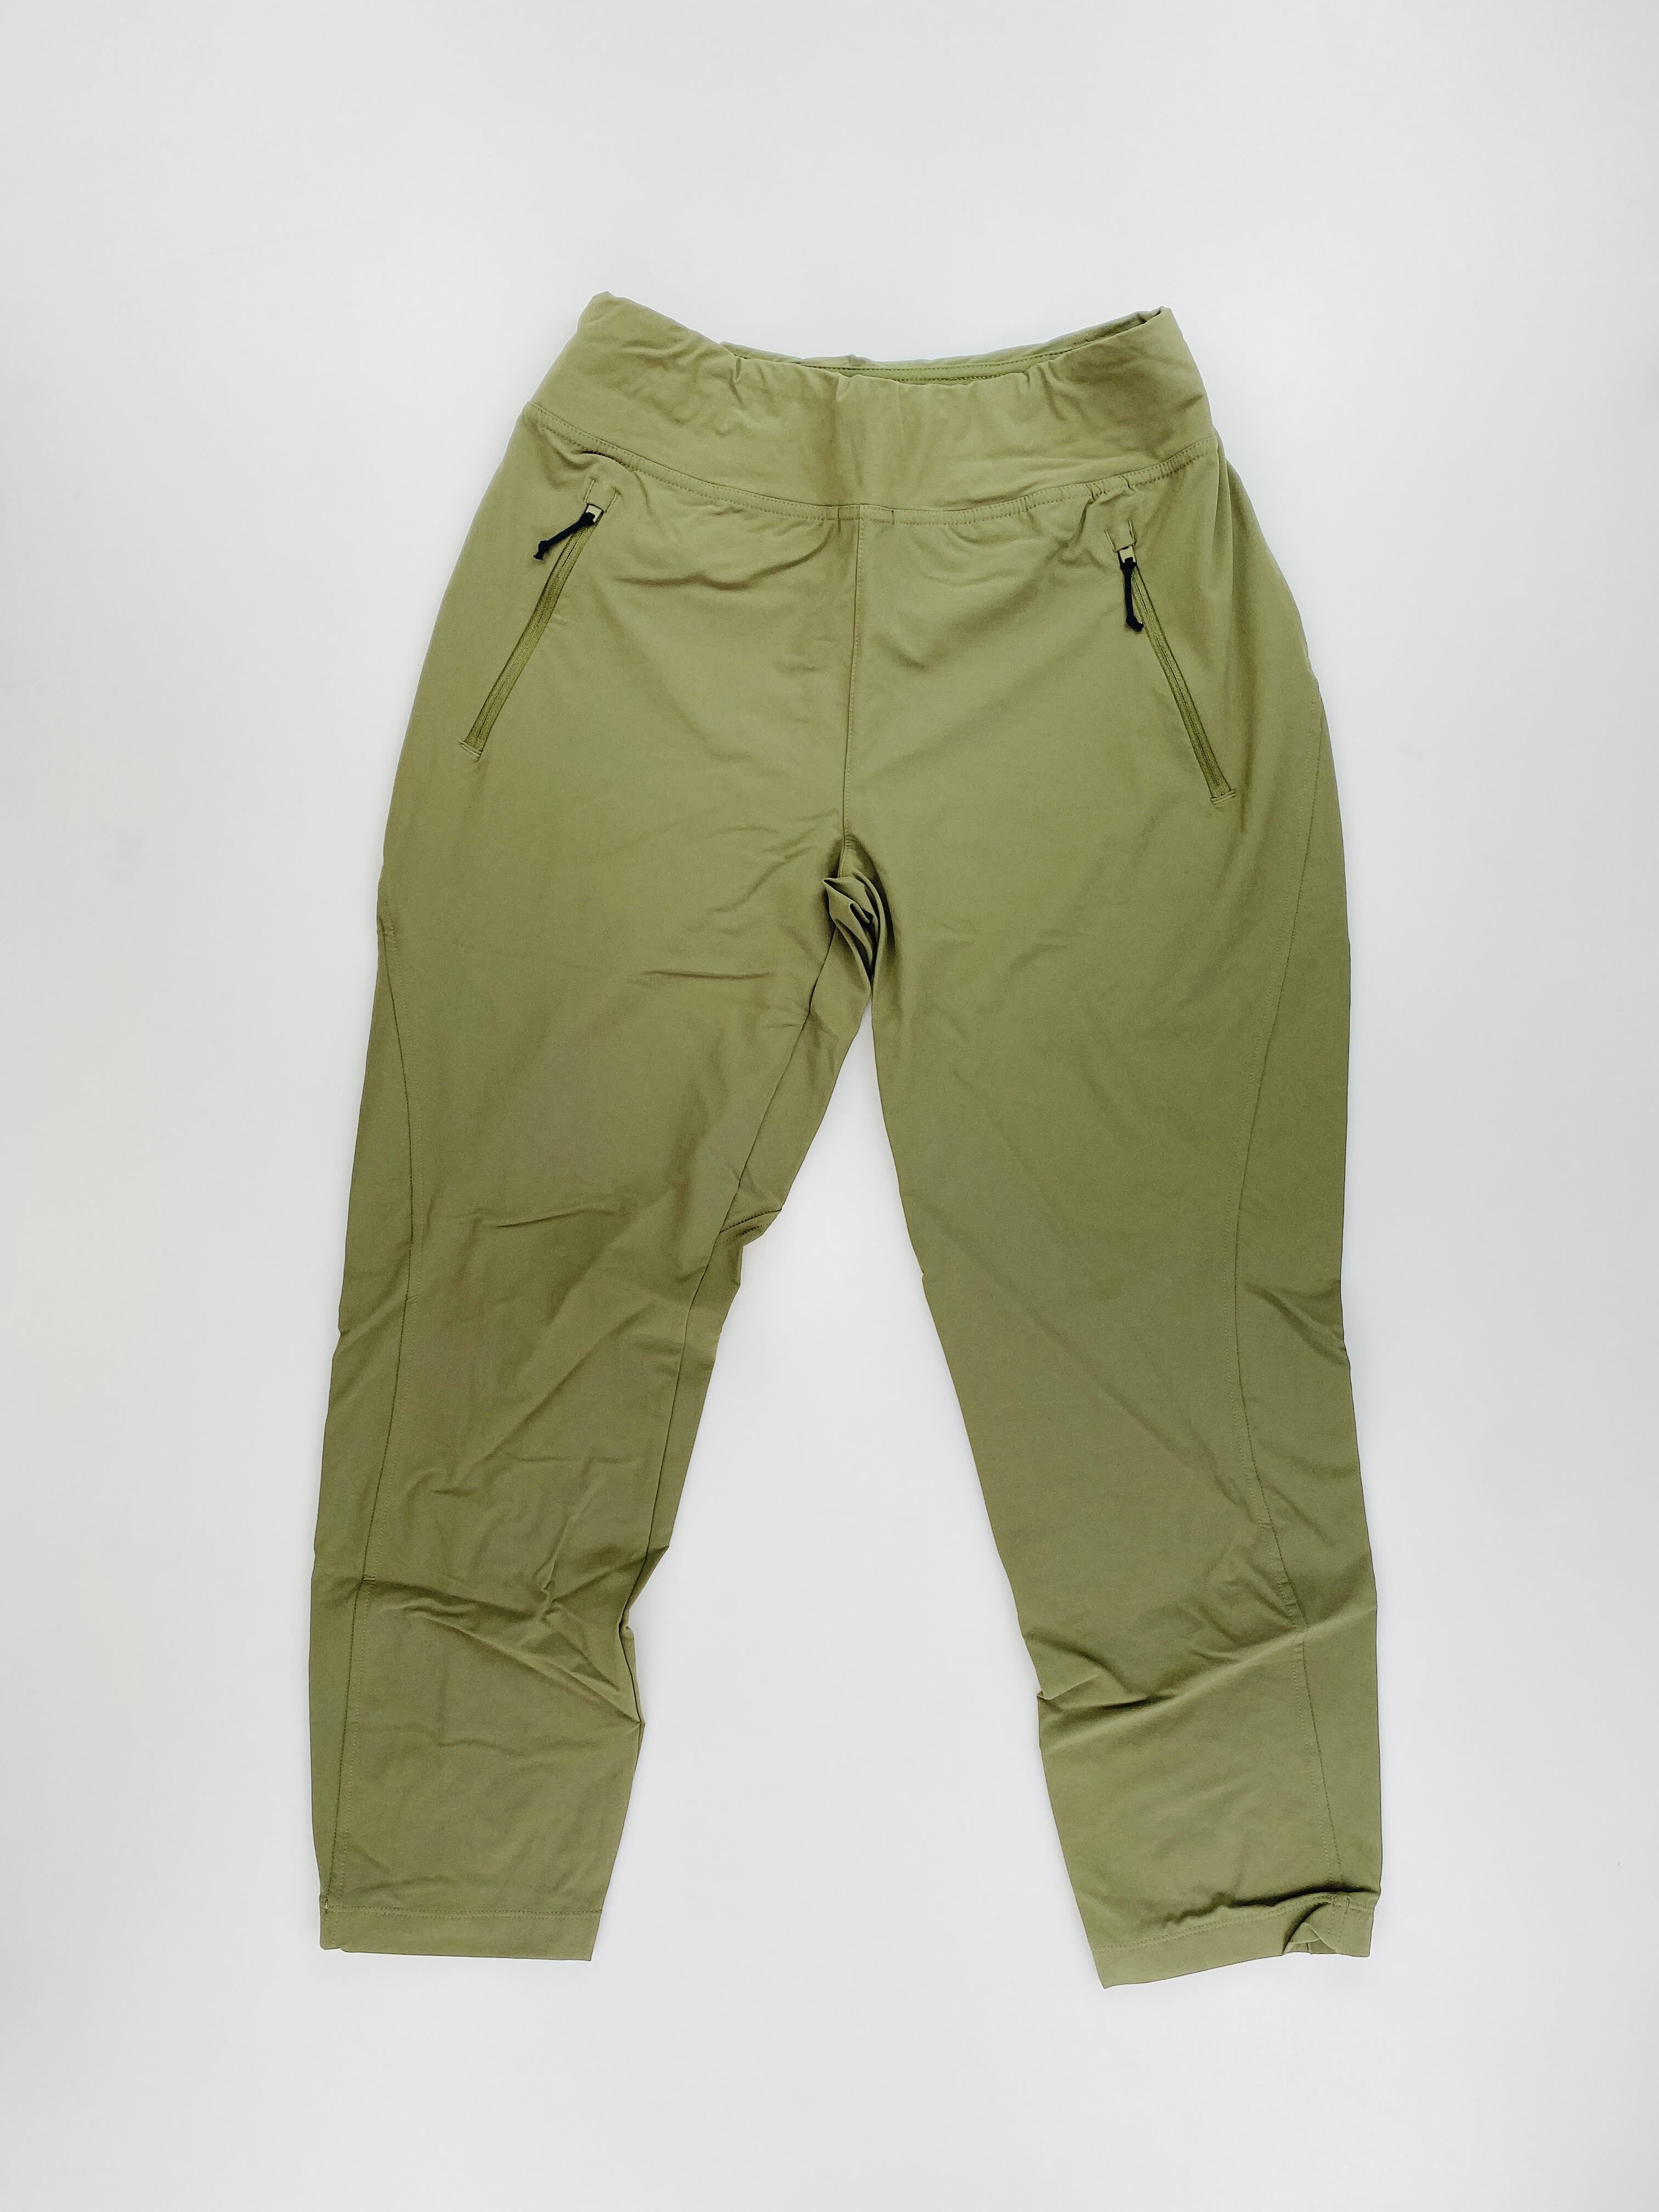 Mountain Hardwear Chockstone™ Women's Pull On Pant Regular - Pantaloni di seconda mano - Donna - Verde oliva - S | Hardloop